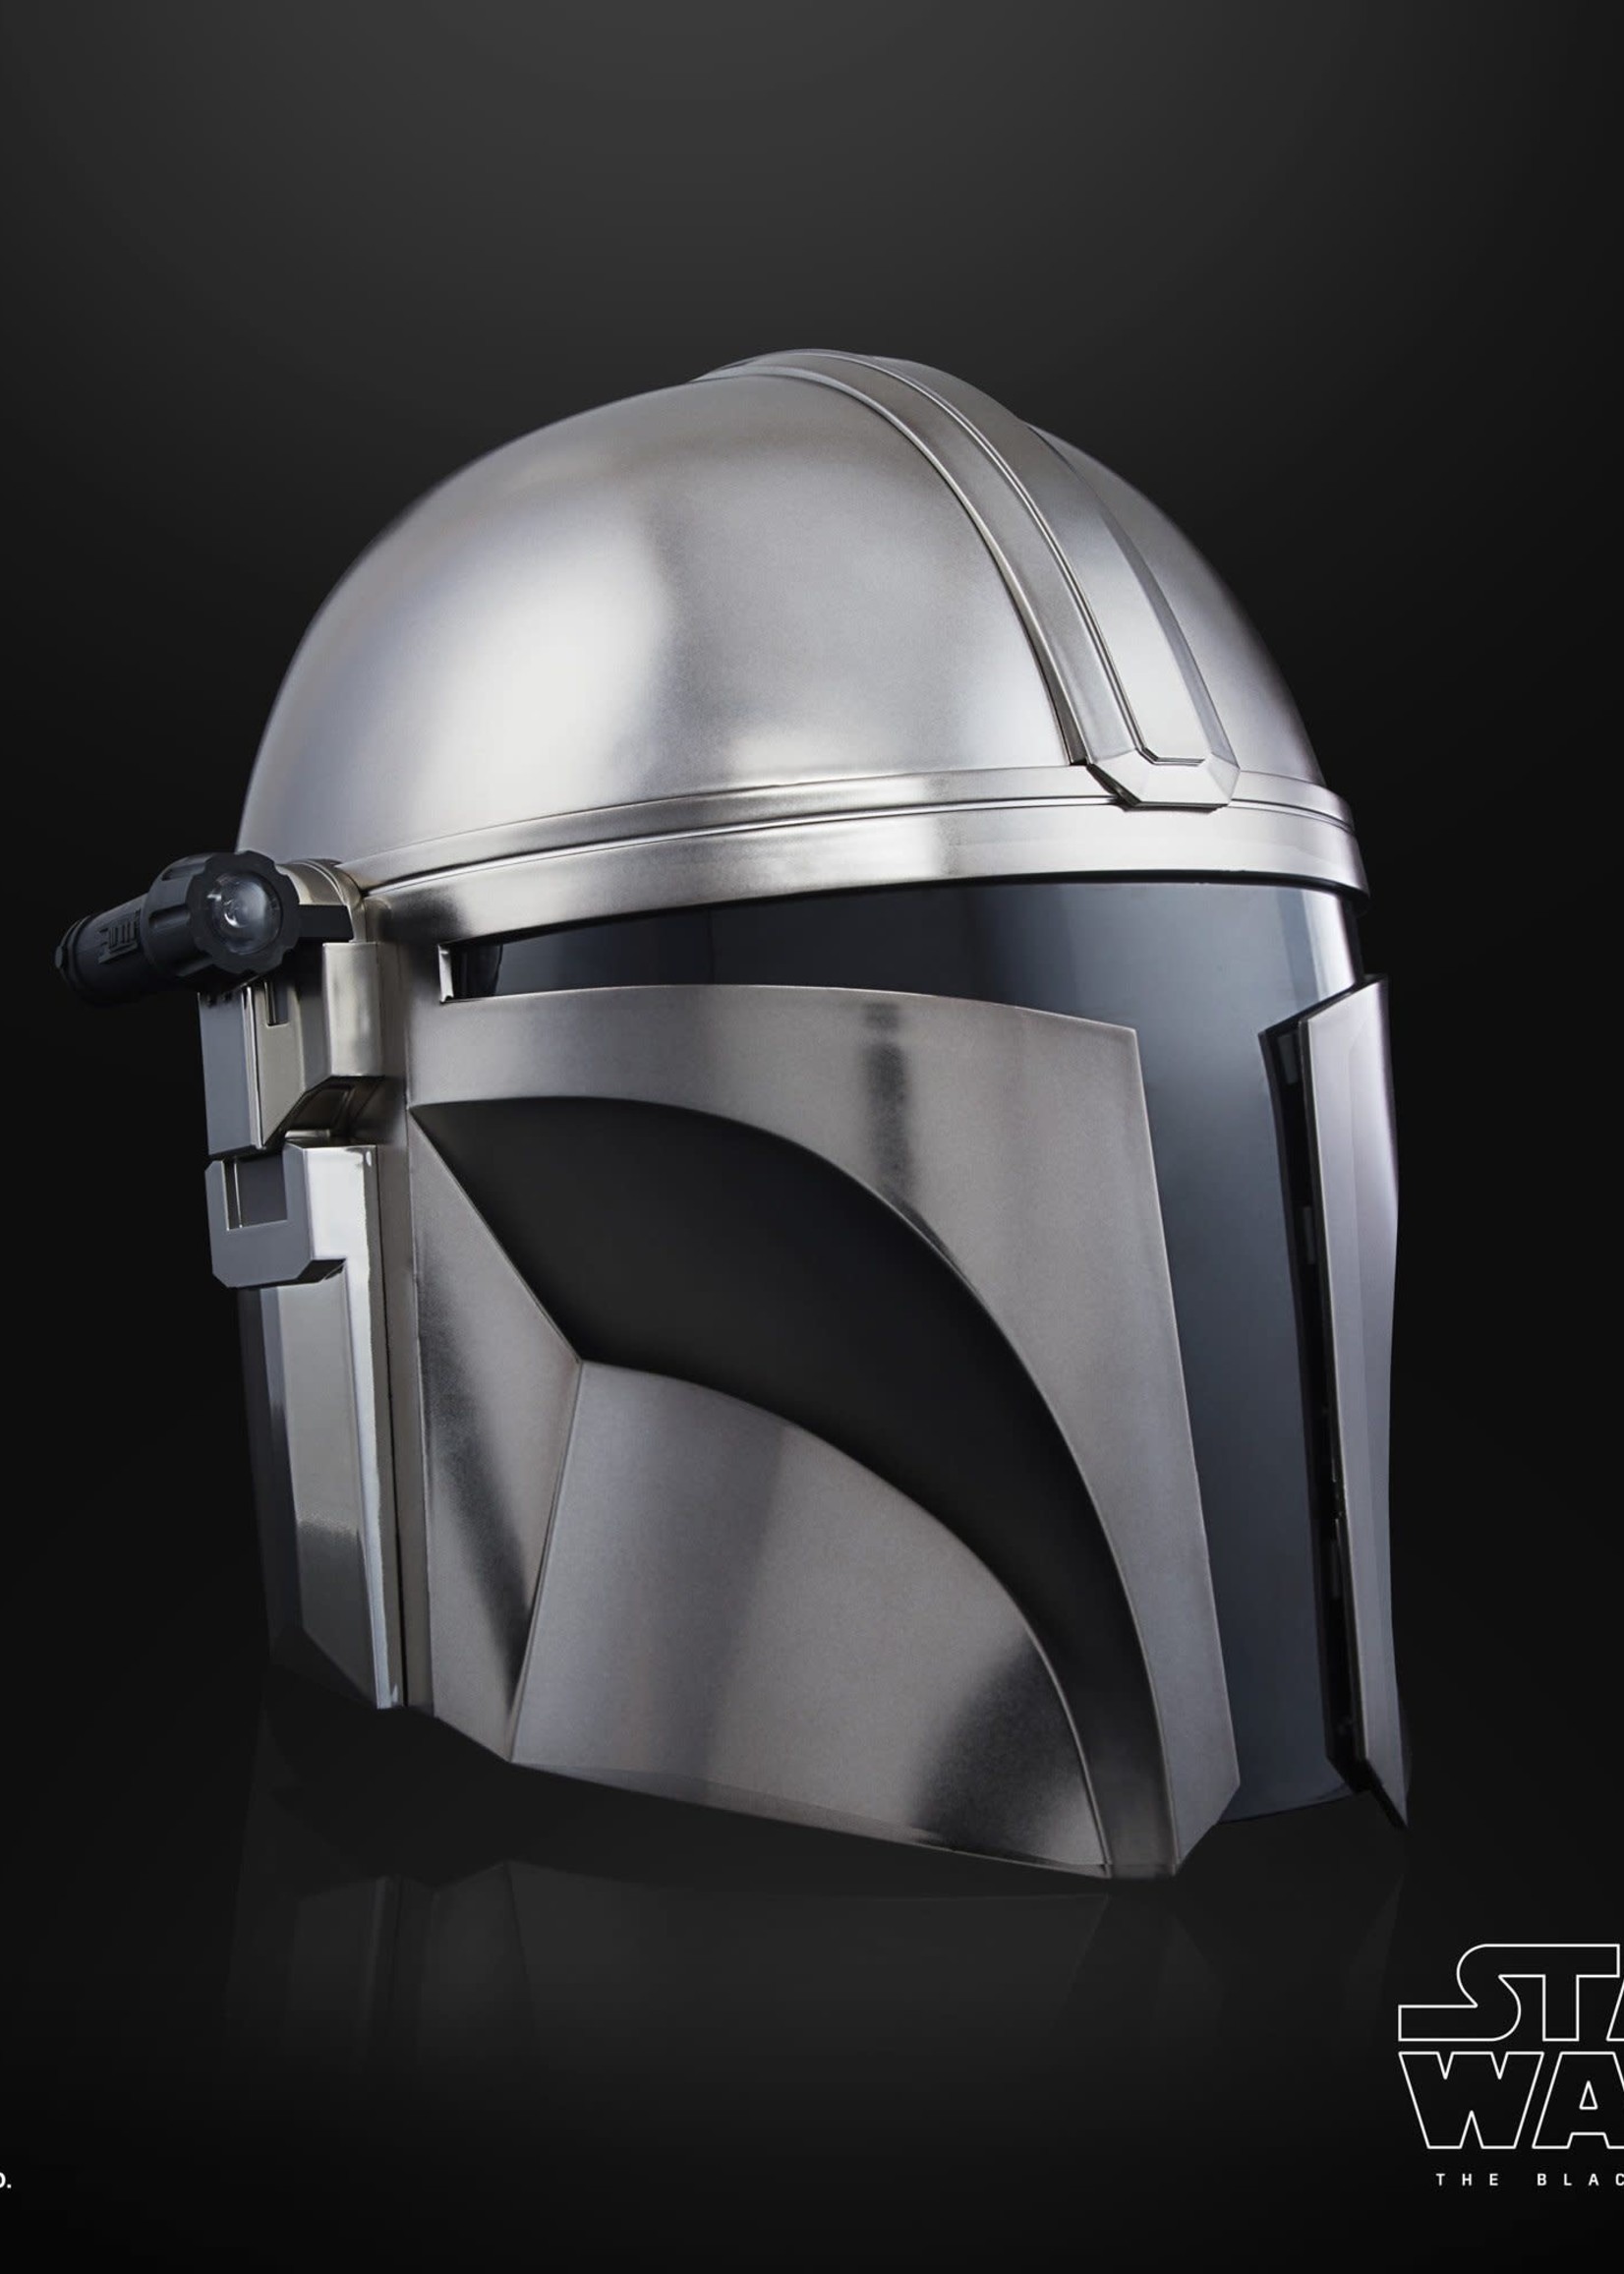 Star Wars Star Wars The Black Series: The Mandalorian Helmet